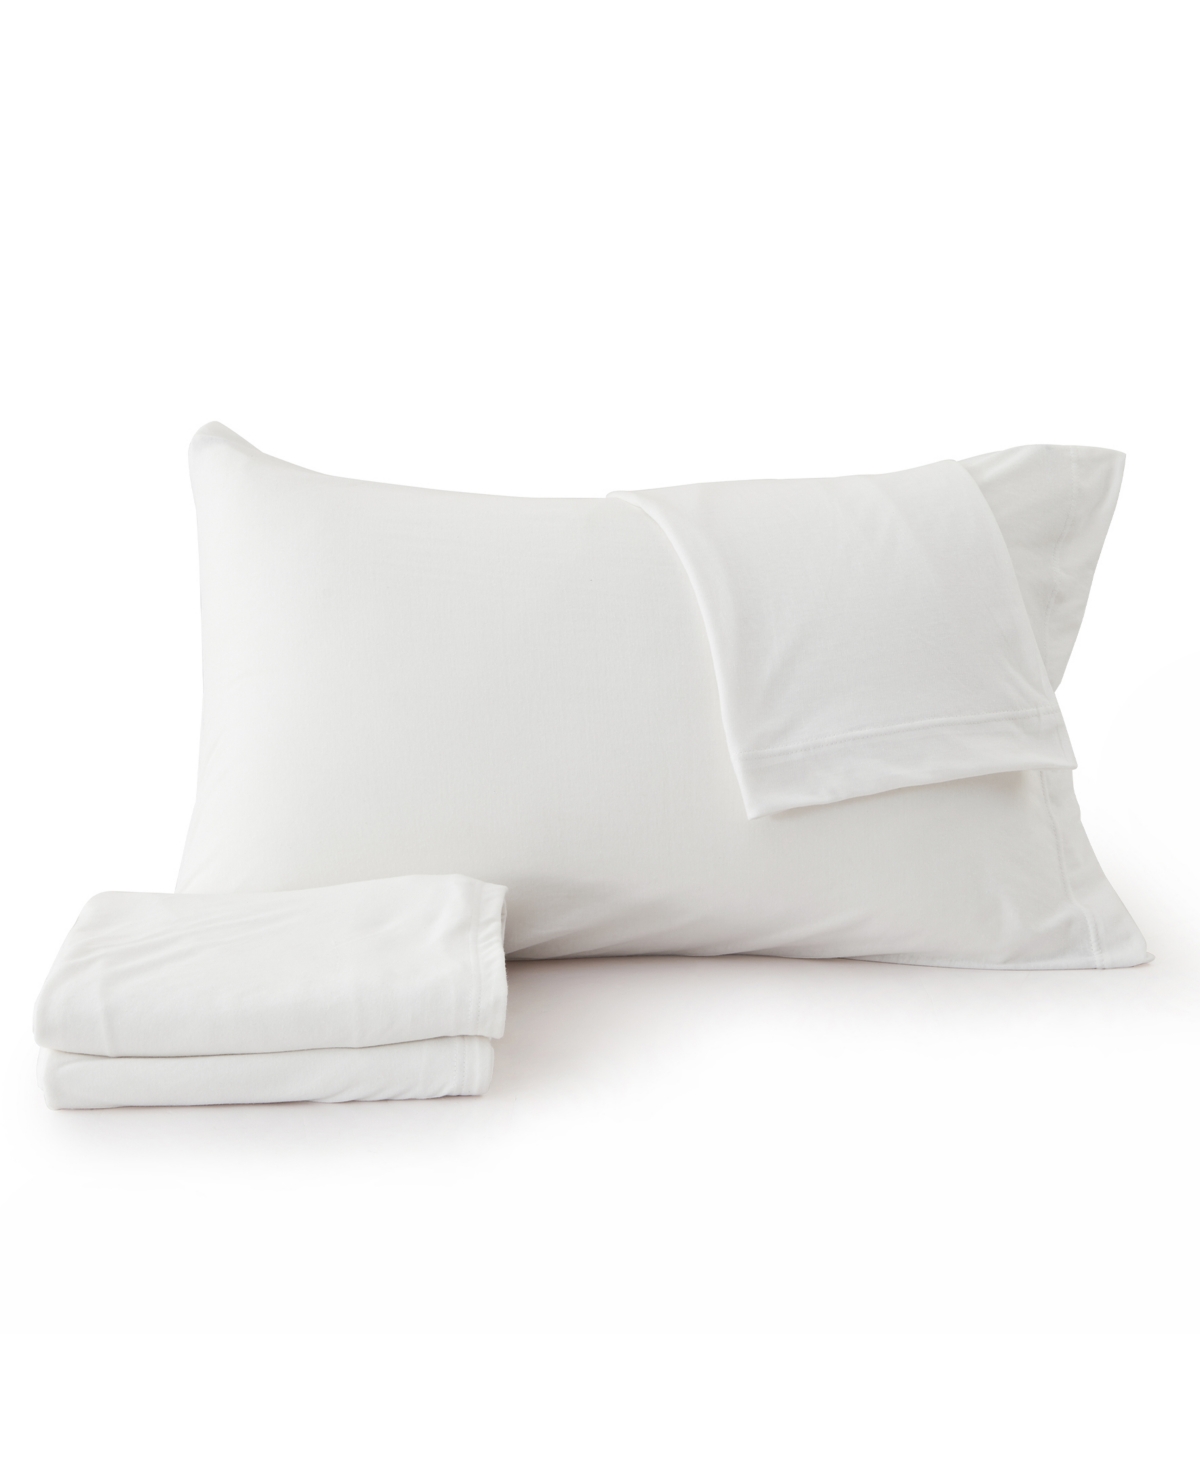 Premium Comforts Heathered Melange T-shirt Jersey Knit Cotton Blend 4 Piece Sheet Set, Full In Winter White